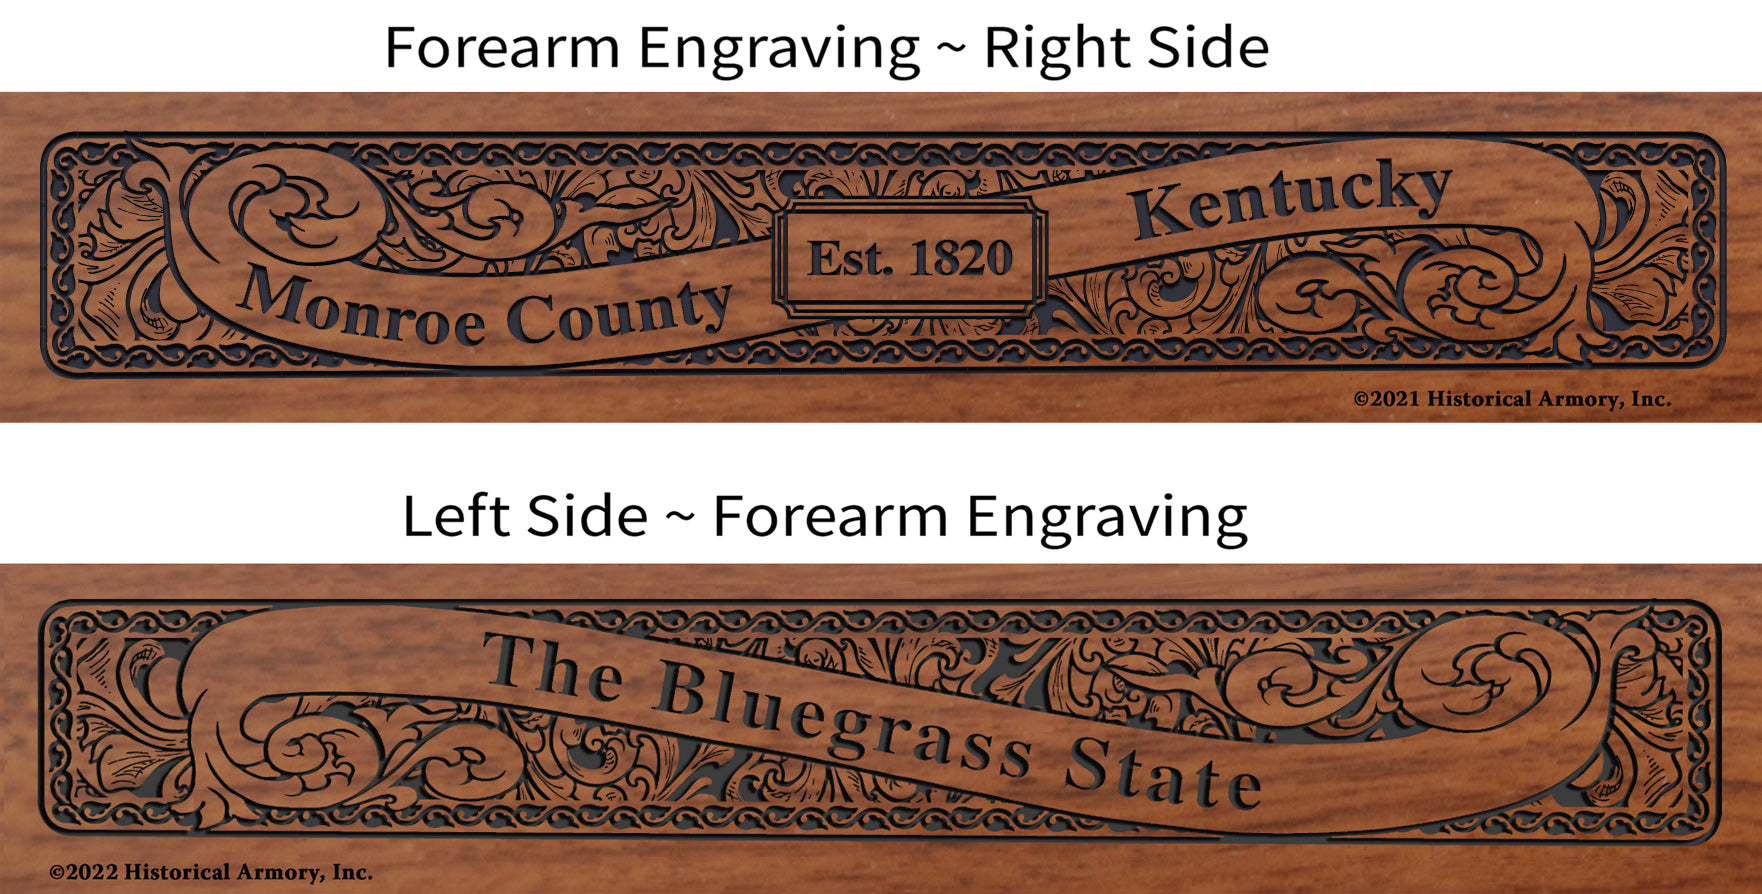 Monroe County Kentucky Engraved Rifle Forearm